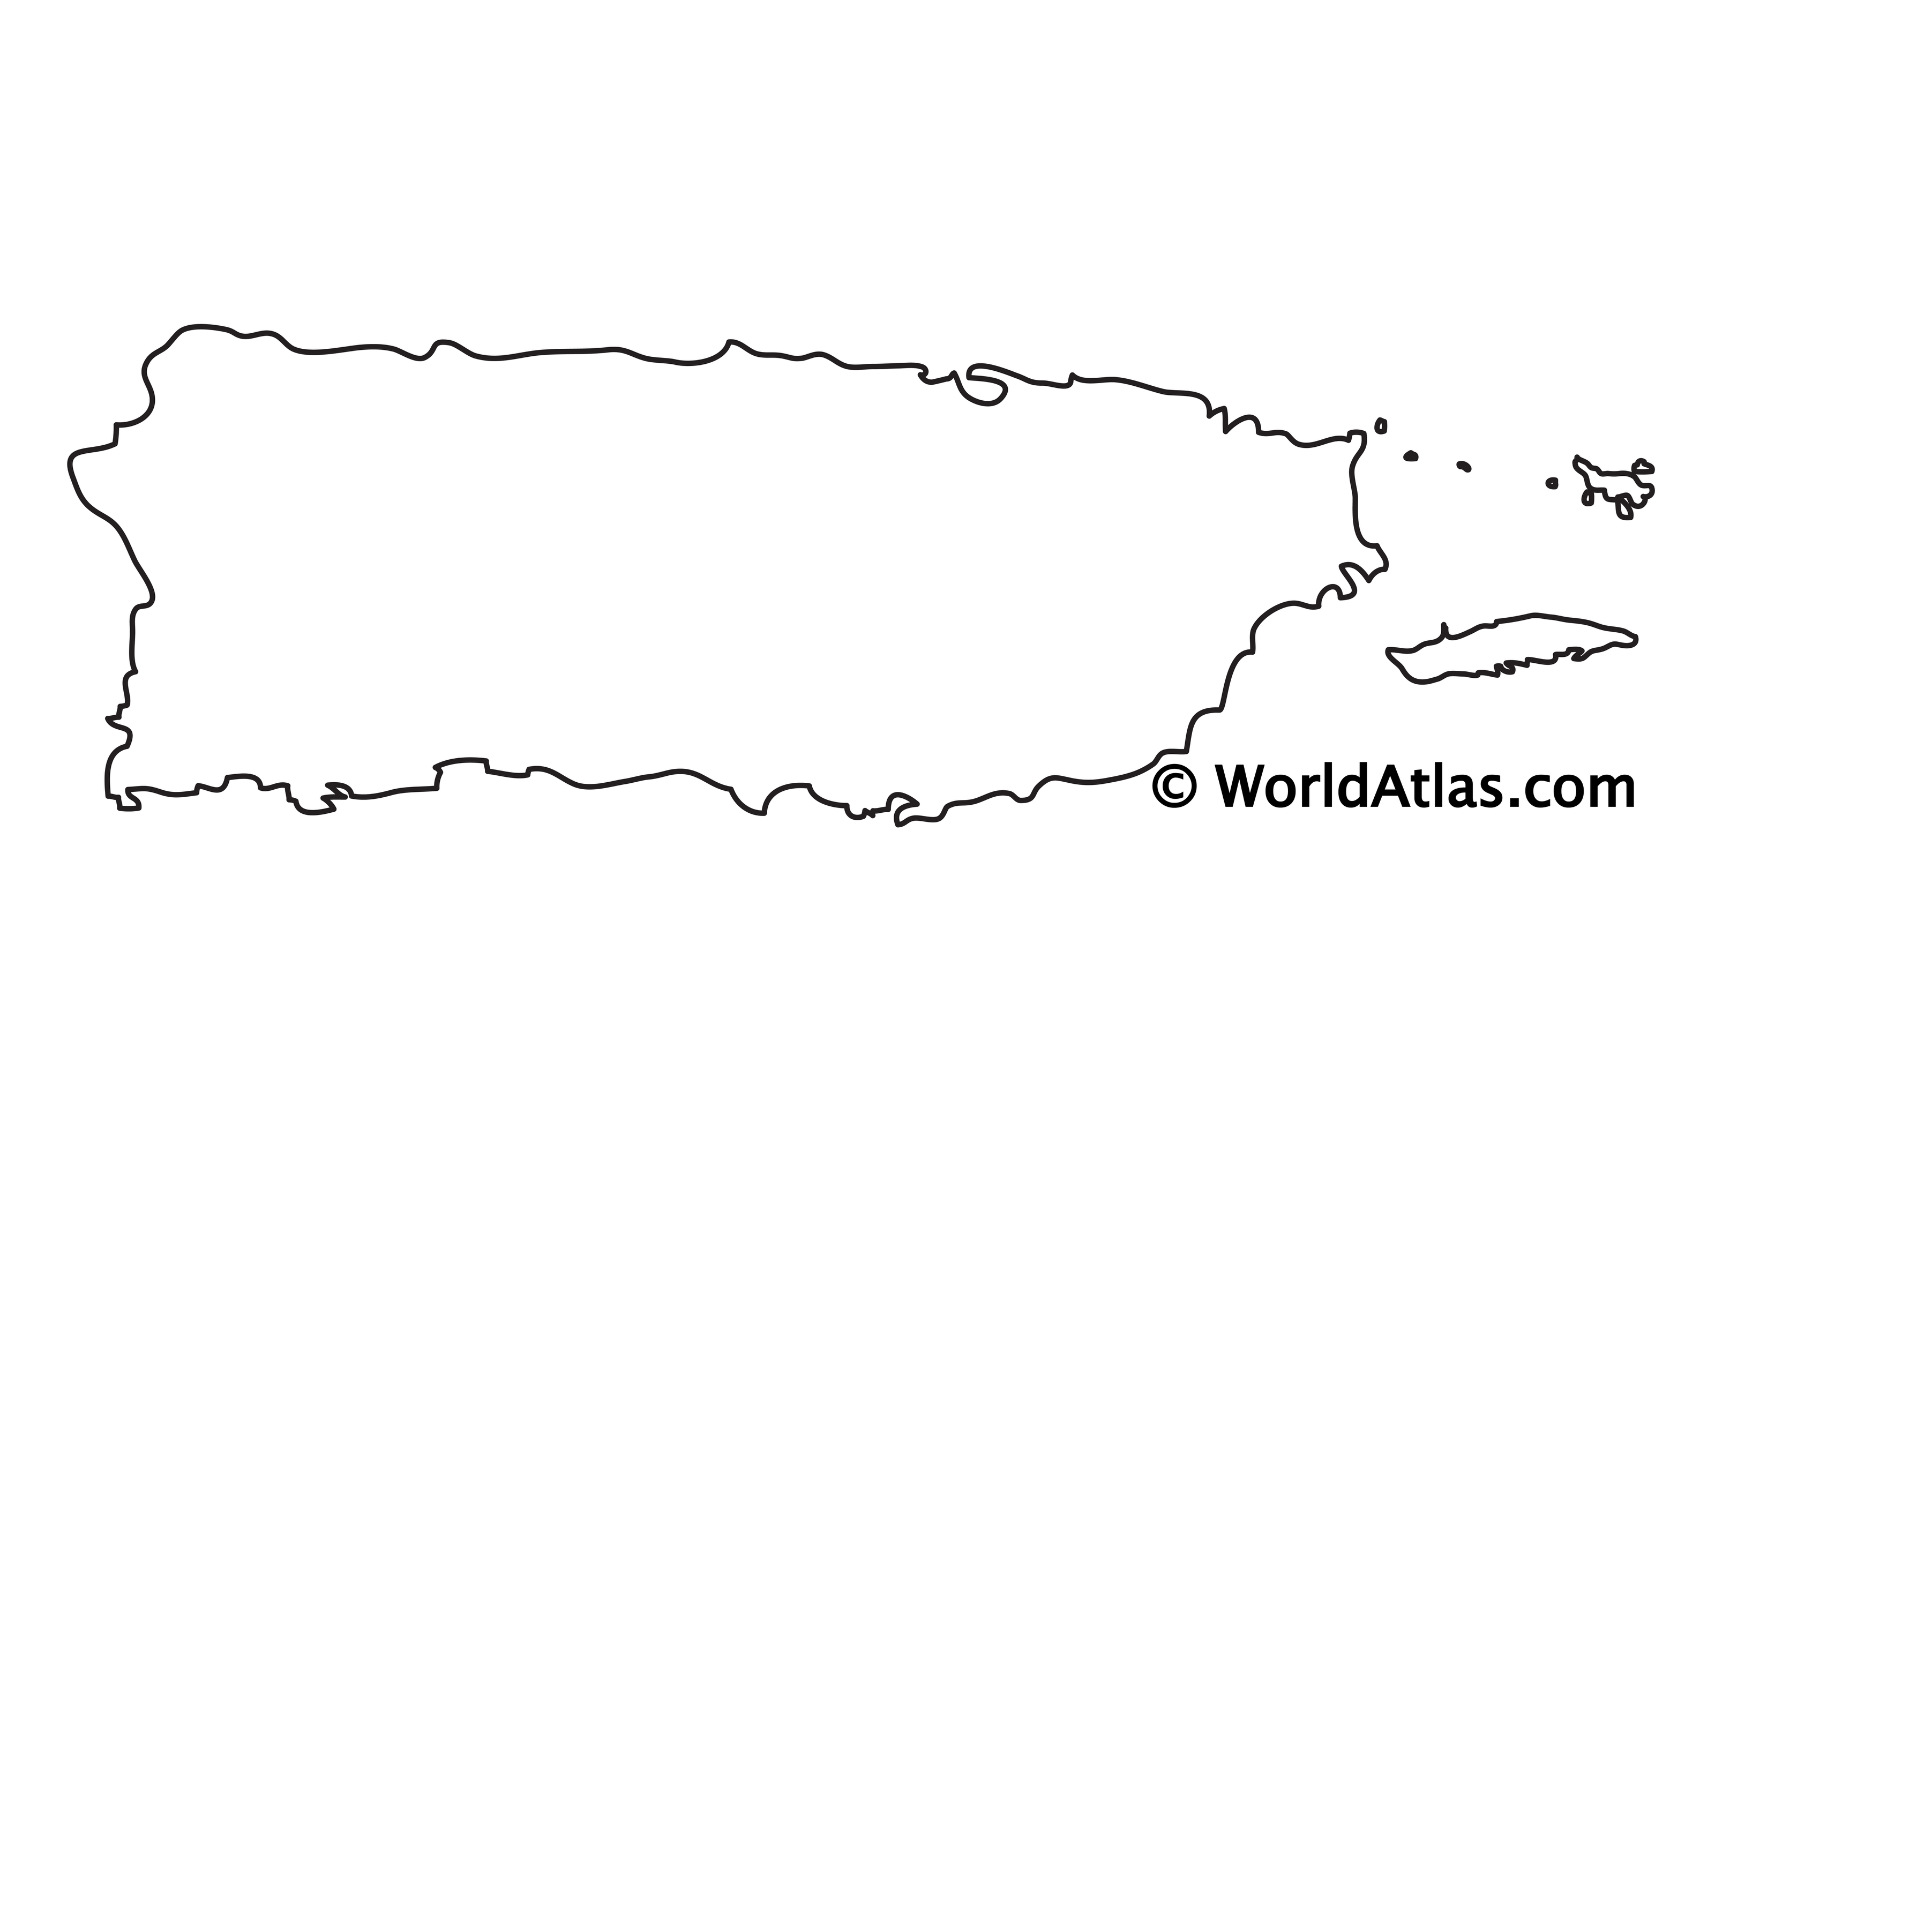 Puerto Rico Maps Facts World Atlas